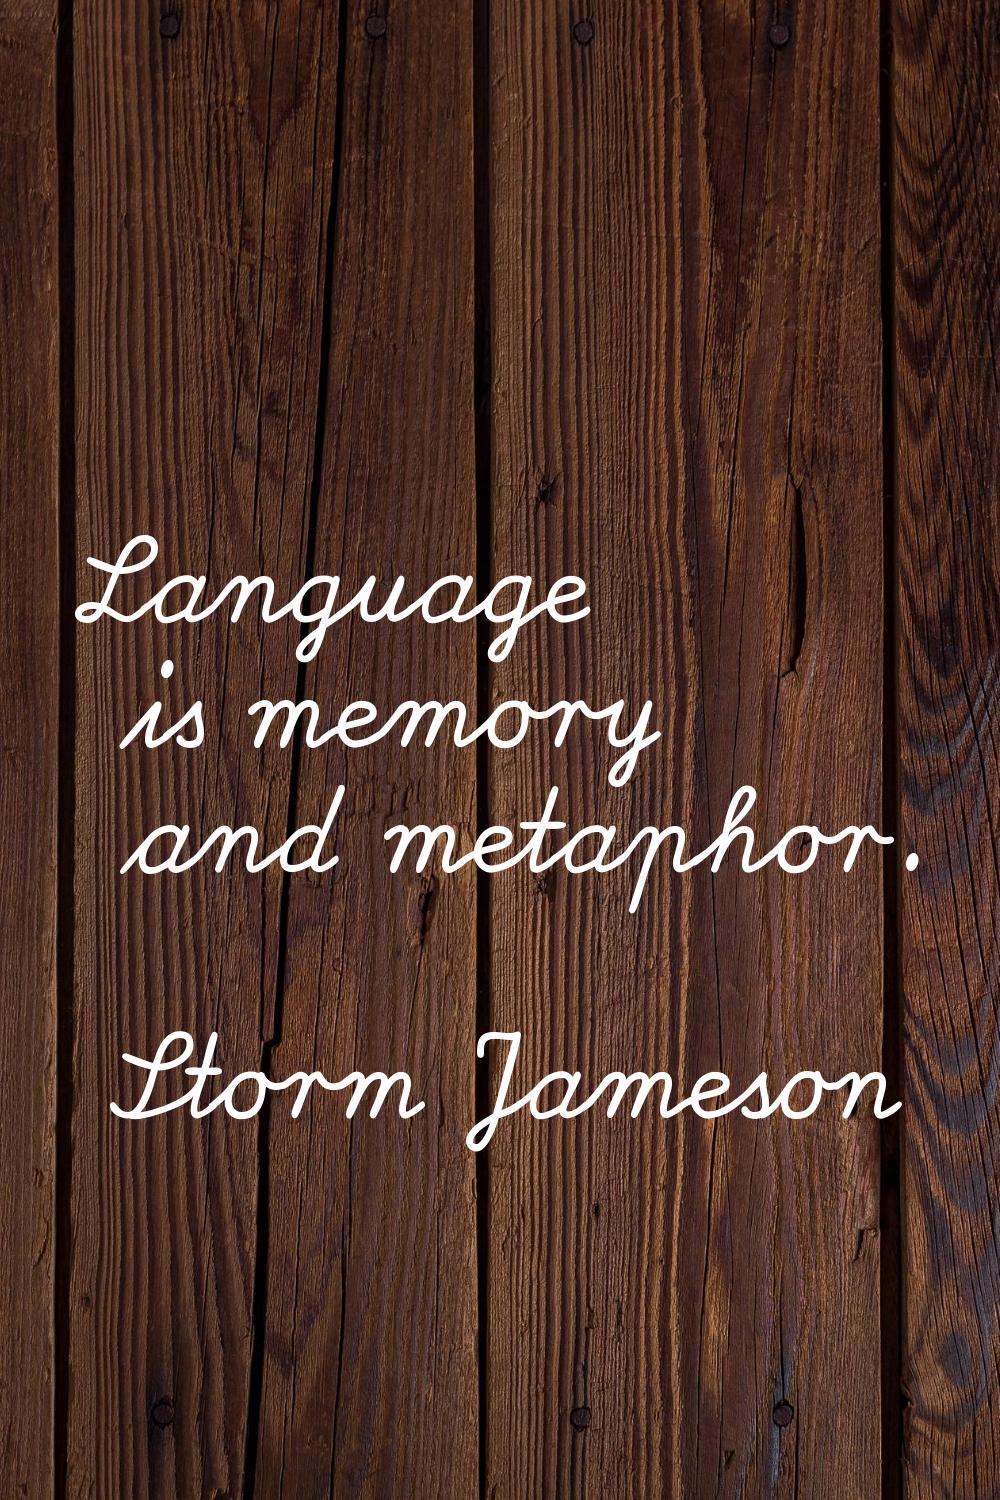 Language is memory and metaphor.